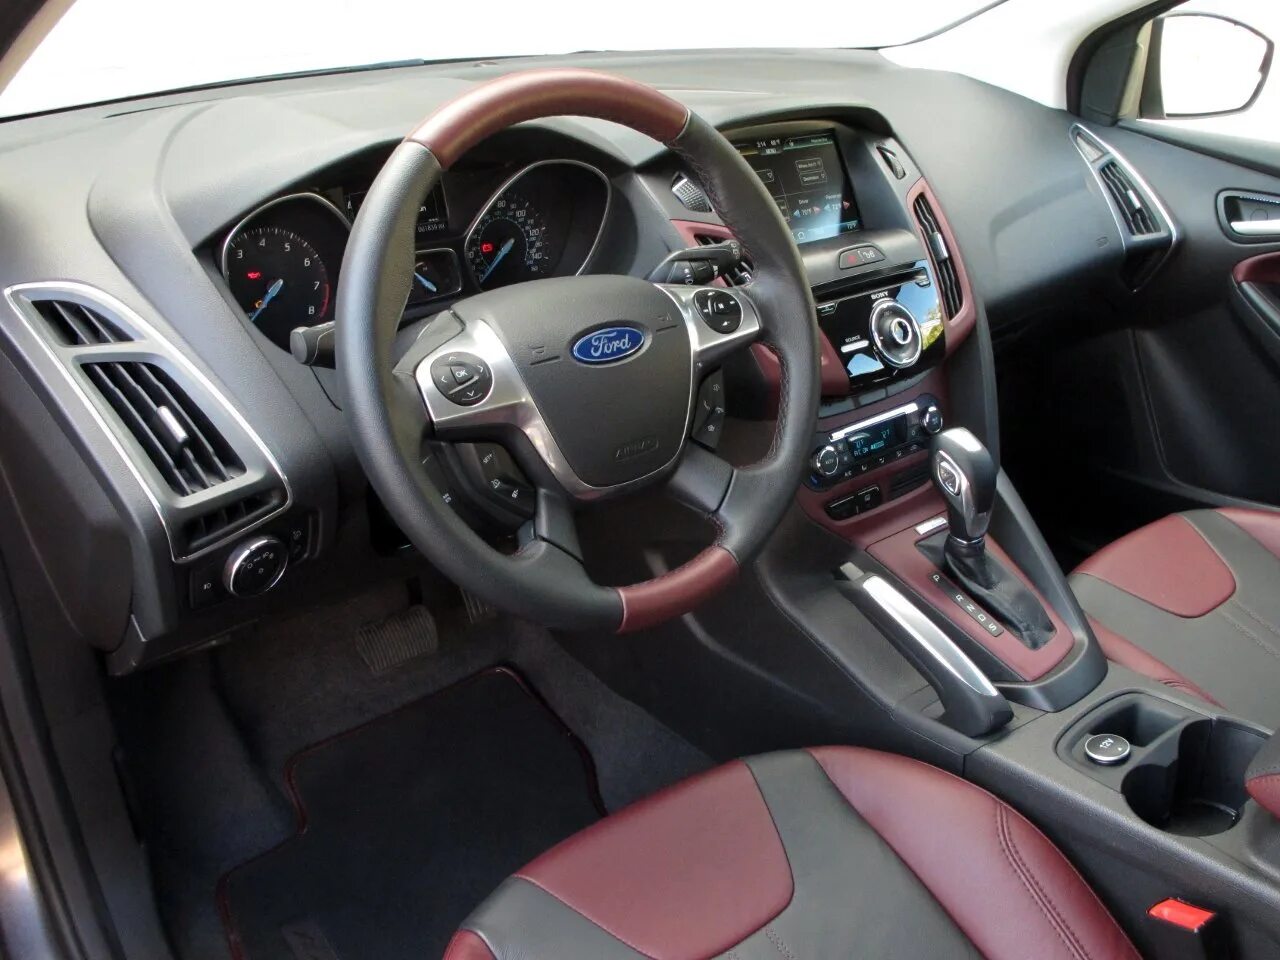 Ford Focus 3 Interior. Форд фокус 3 салон. Торпеда Форд фокус 3. Торпедо на Ford Focus 3 Рестайлинг. Форд хэтчбек салон